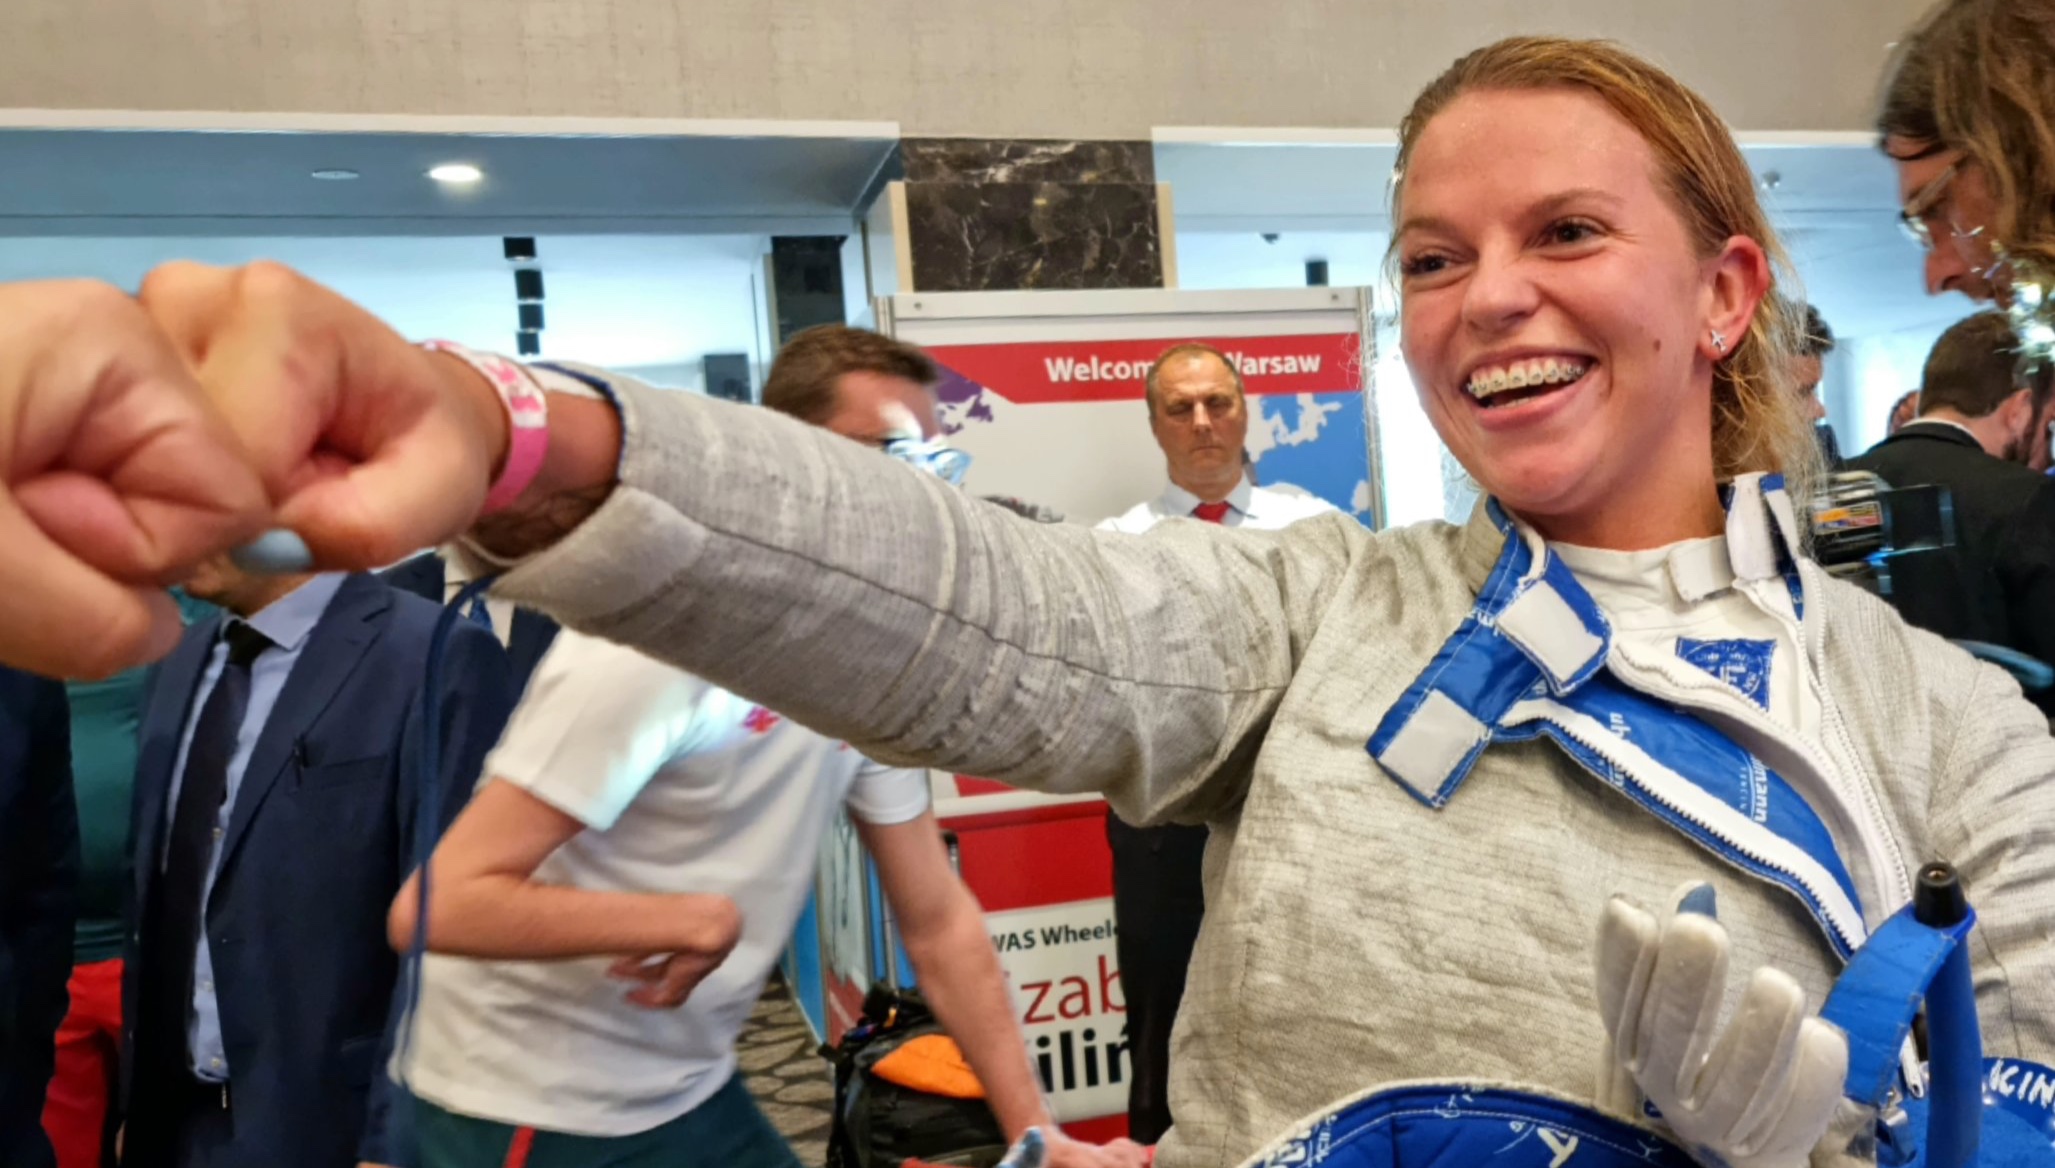 Kinga Dróżdż won 'Kiliński's Saber'! - IWAS Wheelchair Fencing World Cup 2022 in Warsaw